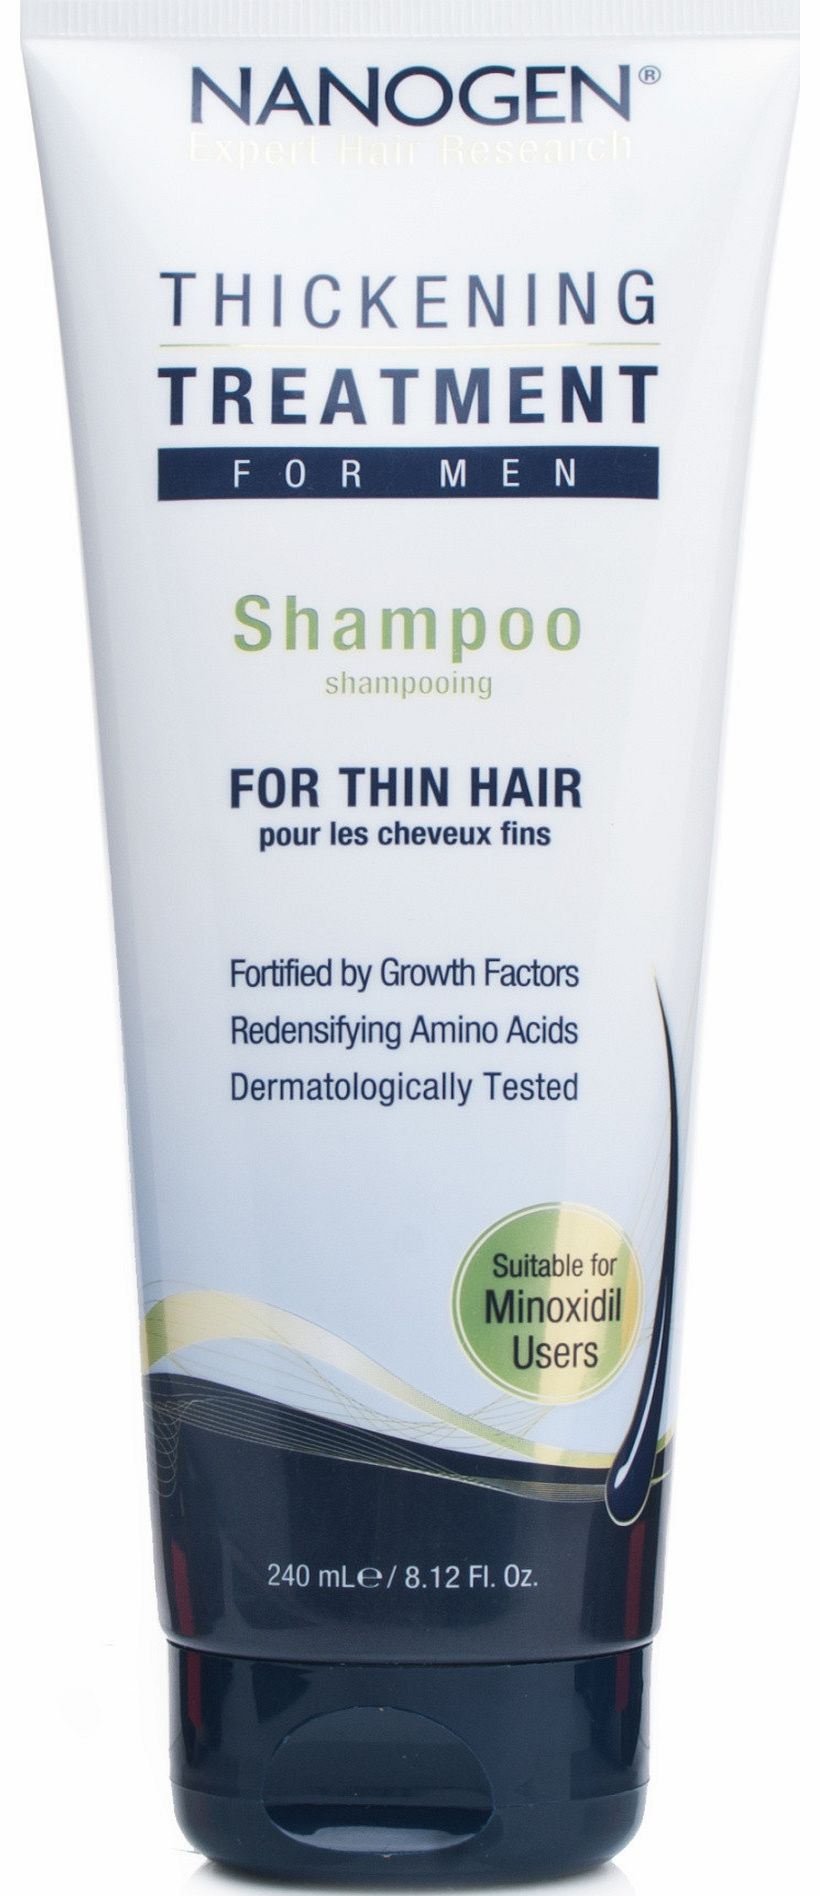 Nanogen Thickening Treatment Shampoo for Men